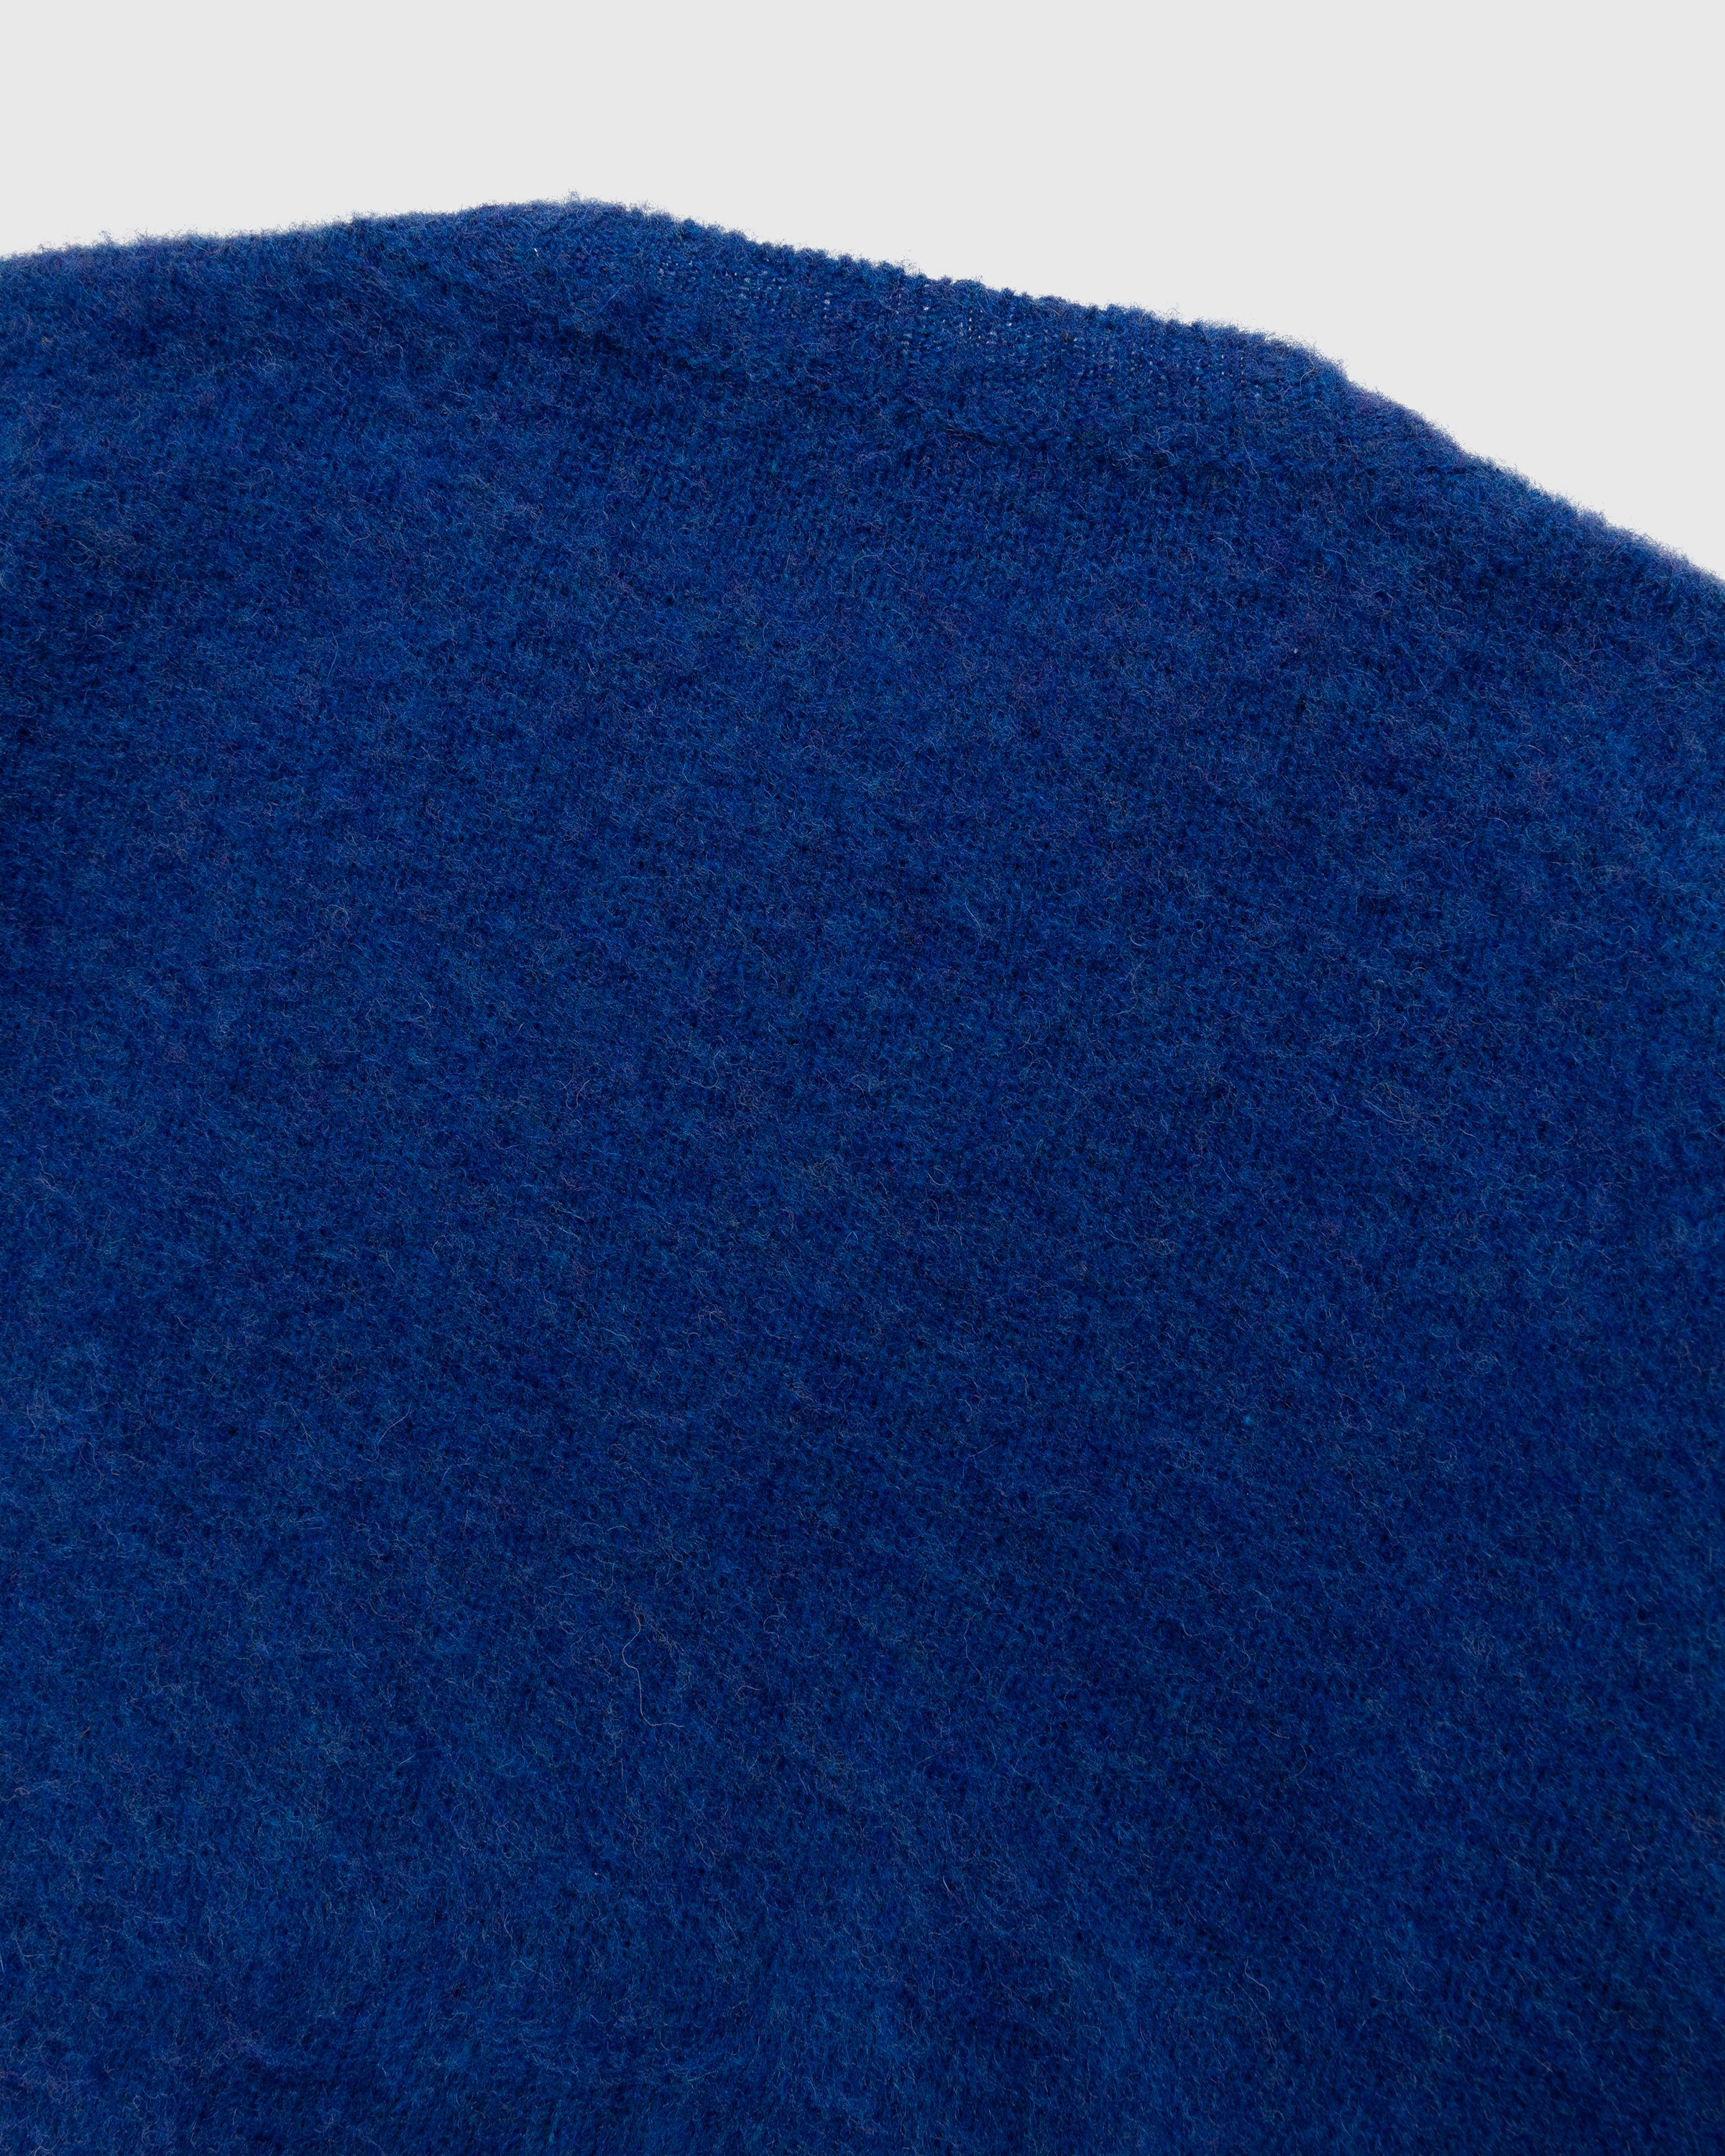 J. Press x Highsnobiety - Shaggy Dog Solid Sweater Blue - Clothing - Blue - Image 4